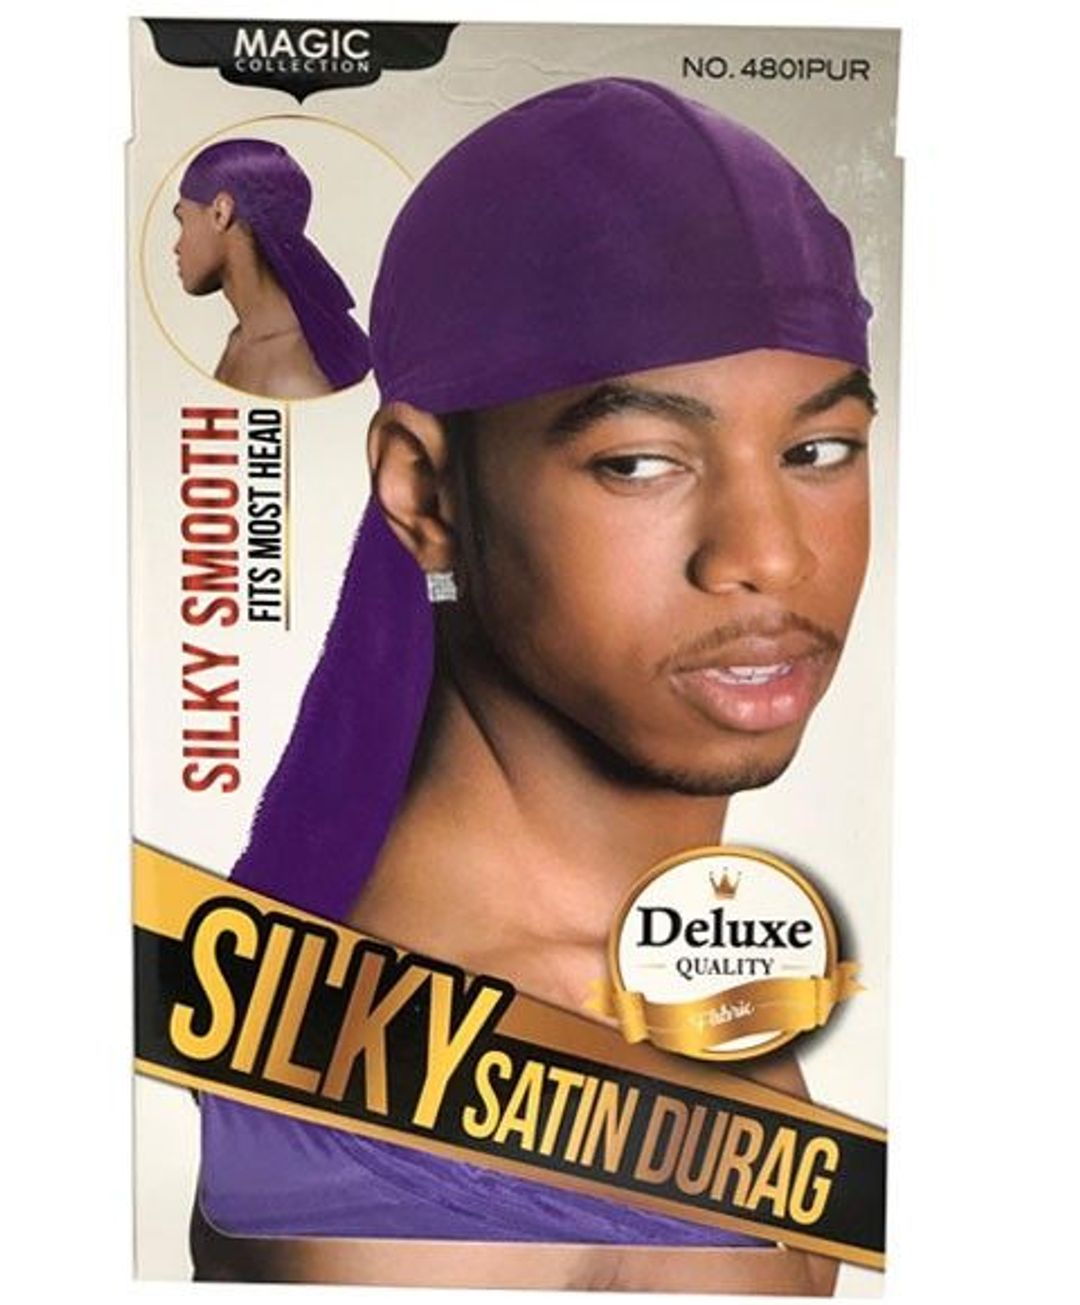 Magic Men's Silky Satin Durag Purple - 4801pur